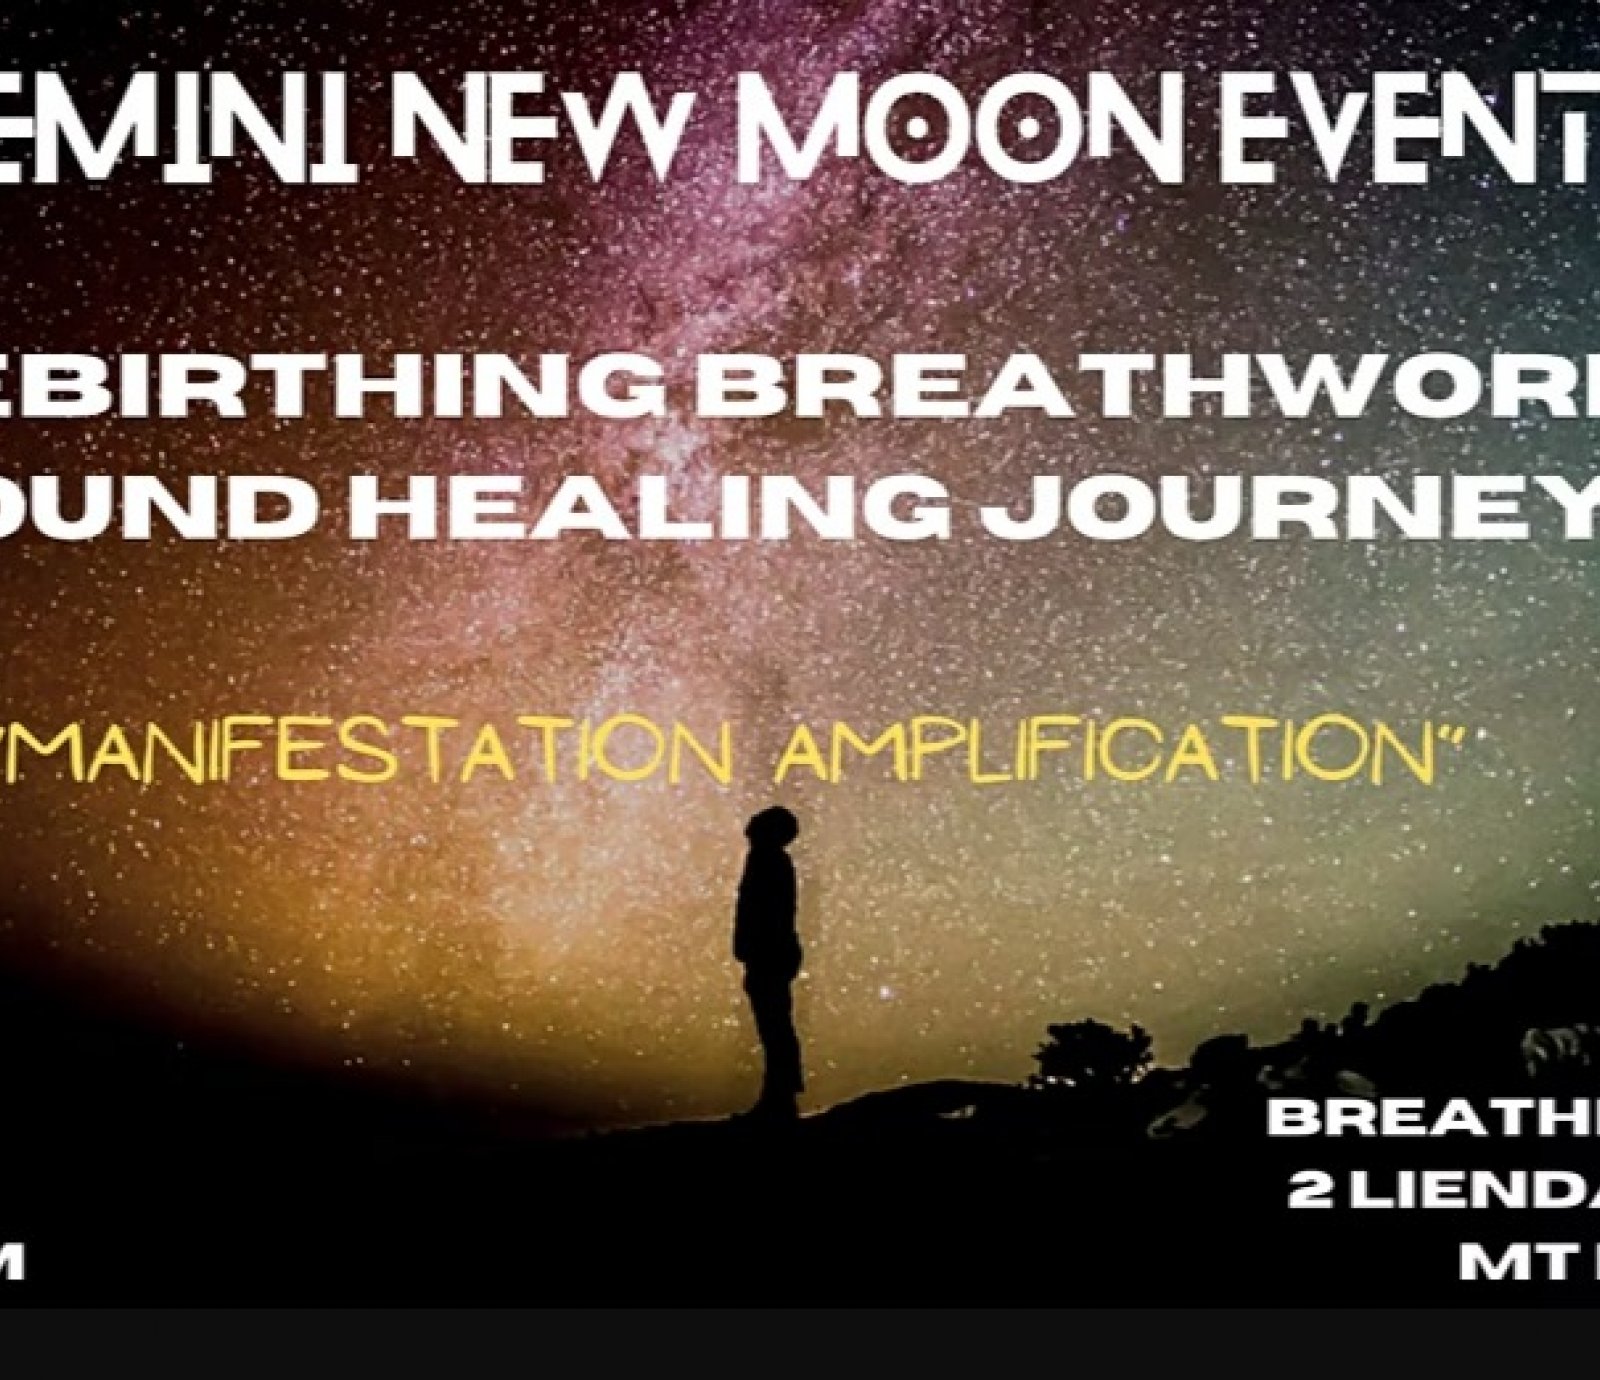 Gemini New Moon - Rebirthing Breathwork & Sound Healing